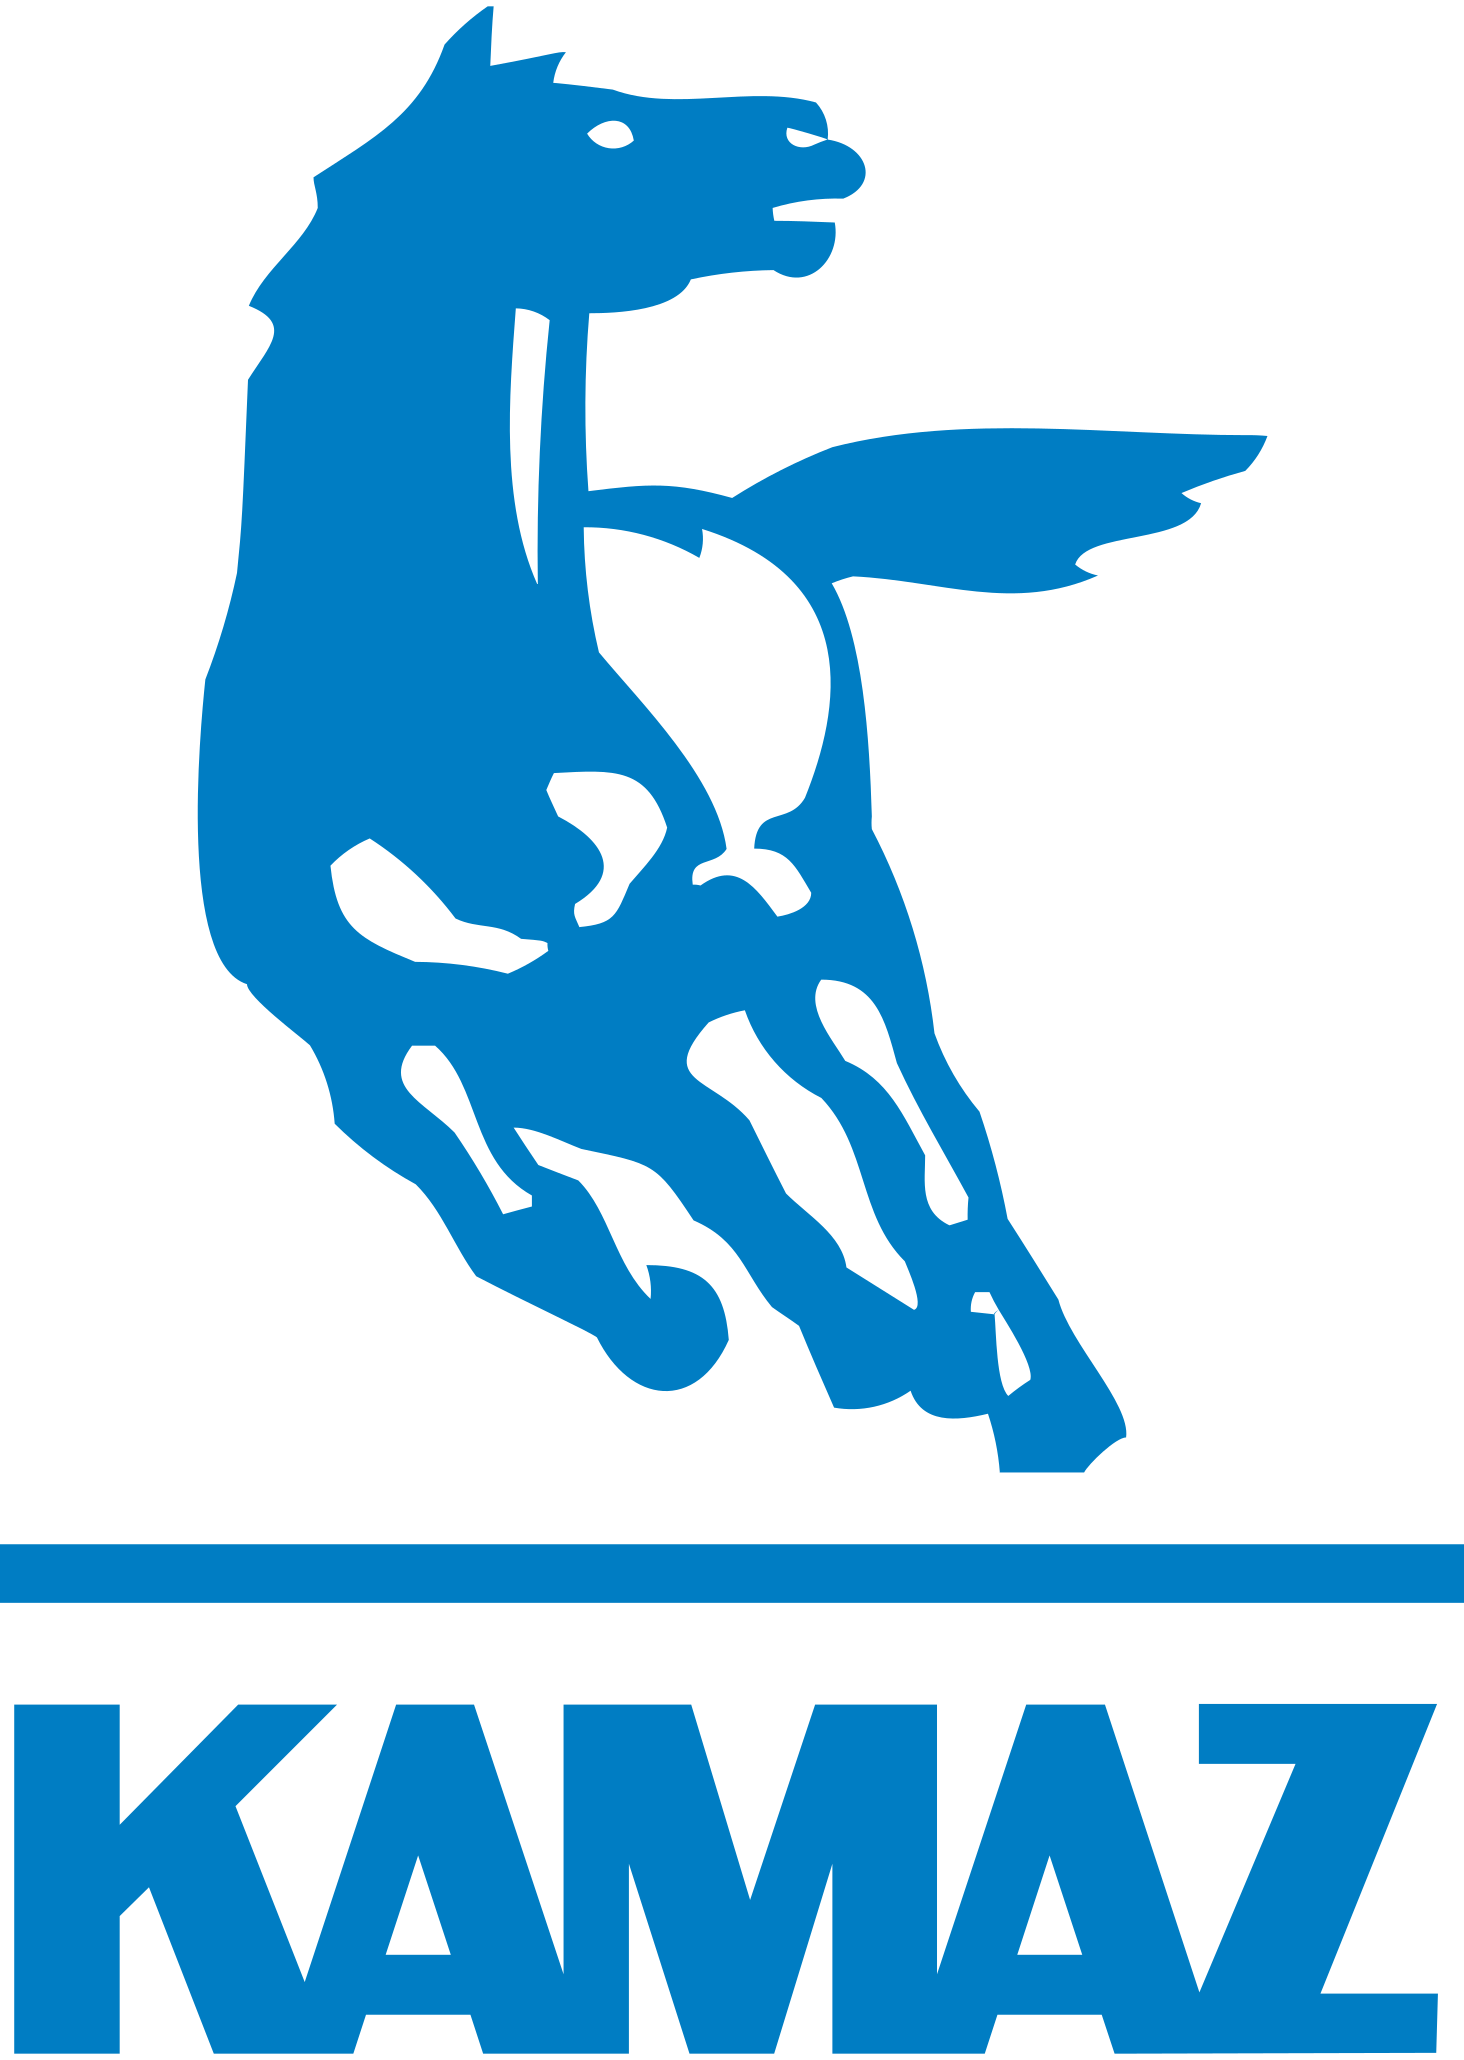 KAMAZ Logo.png